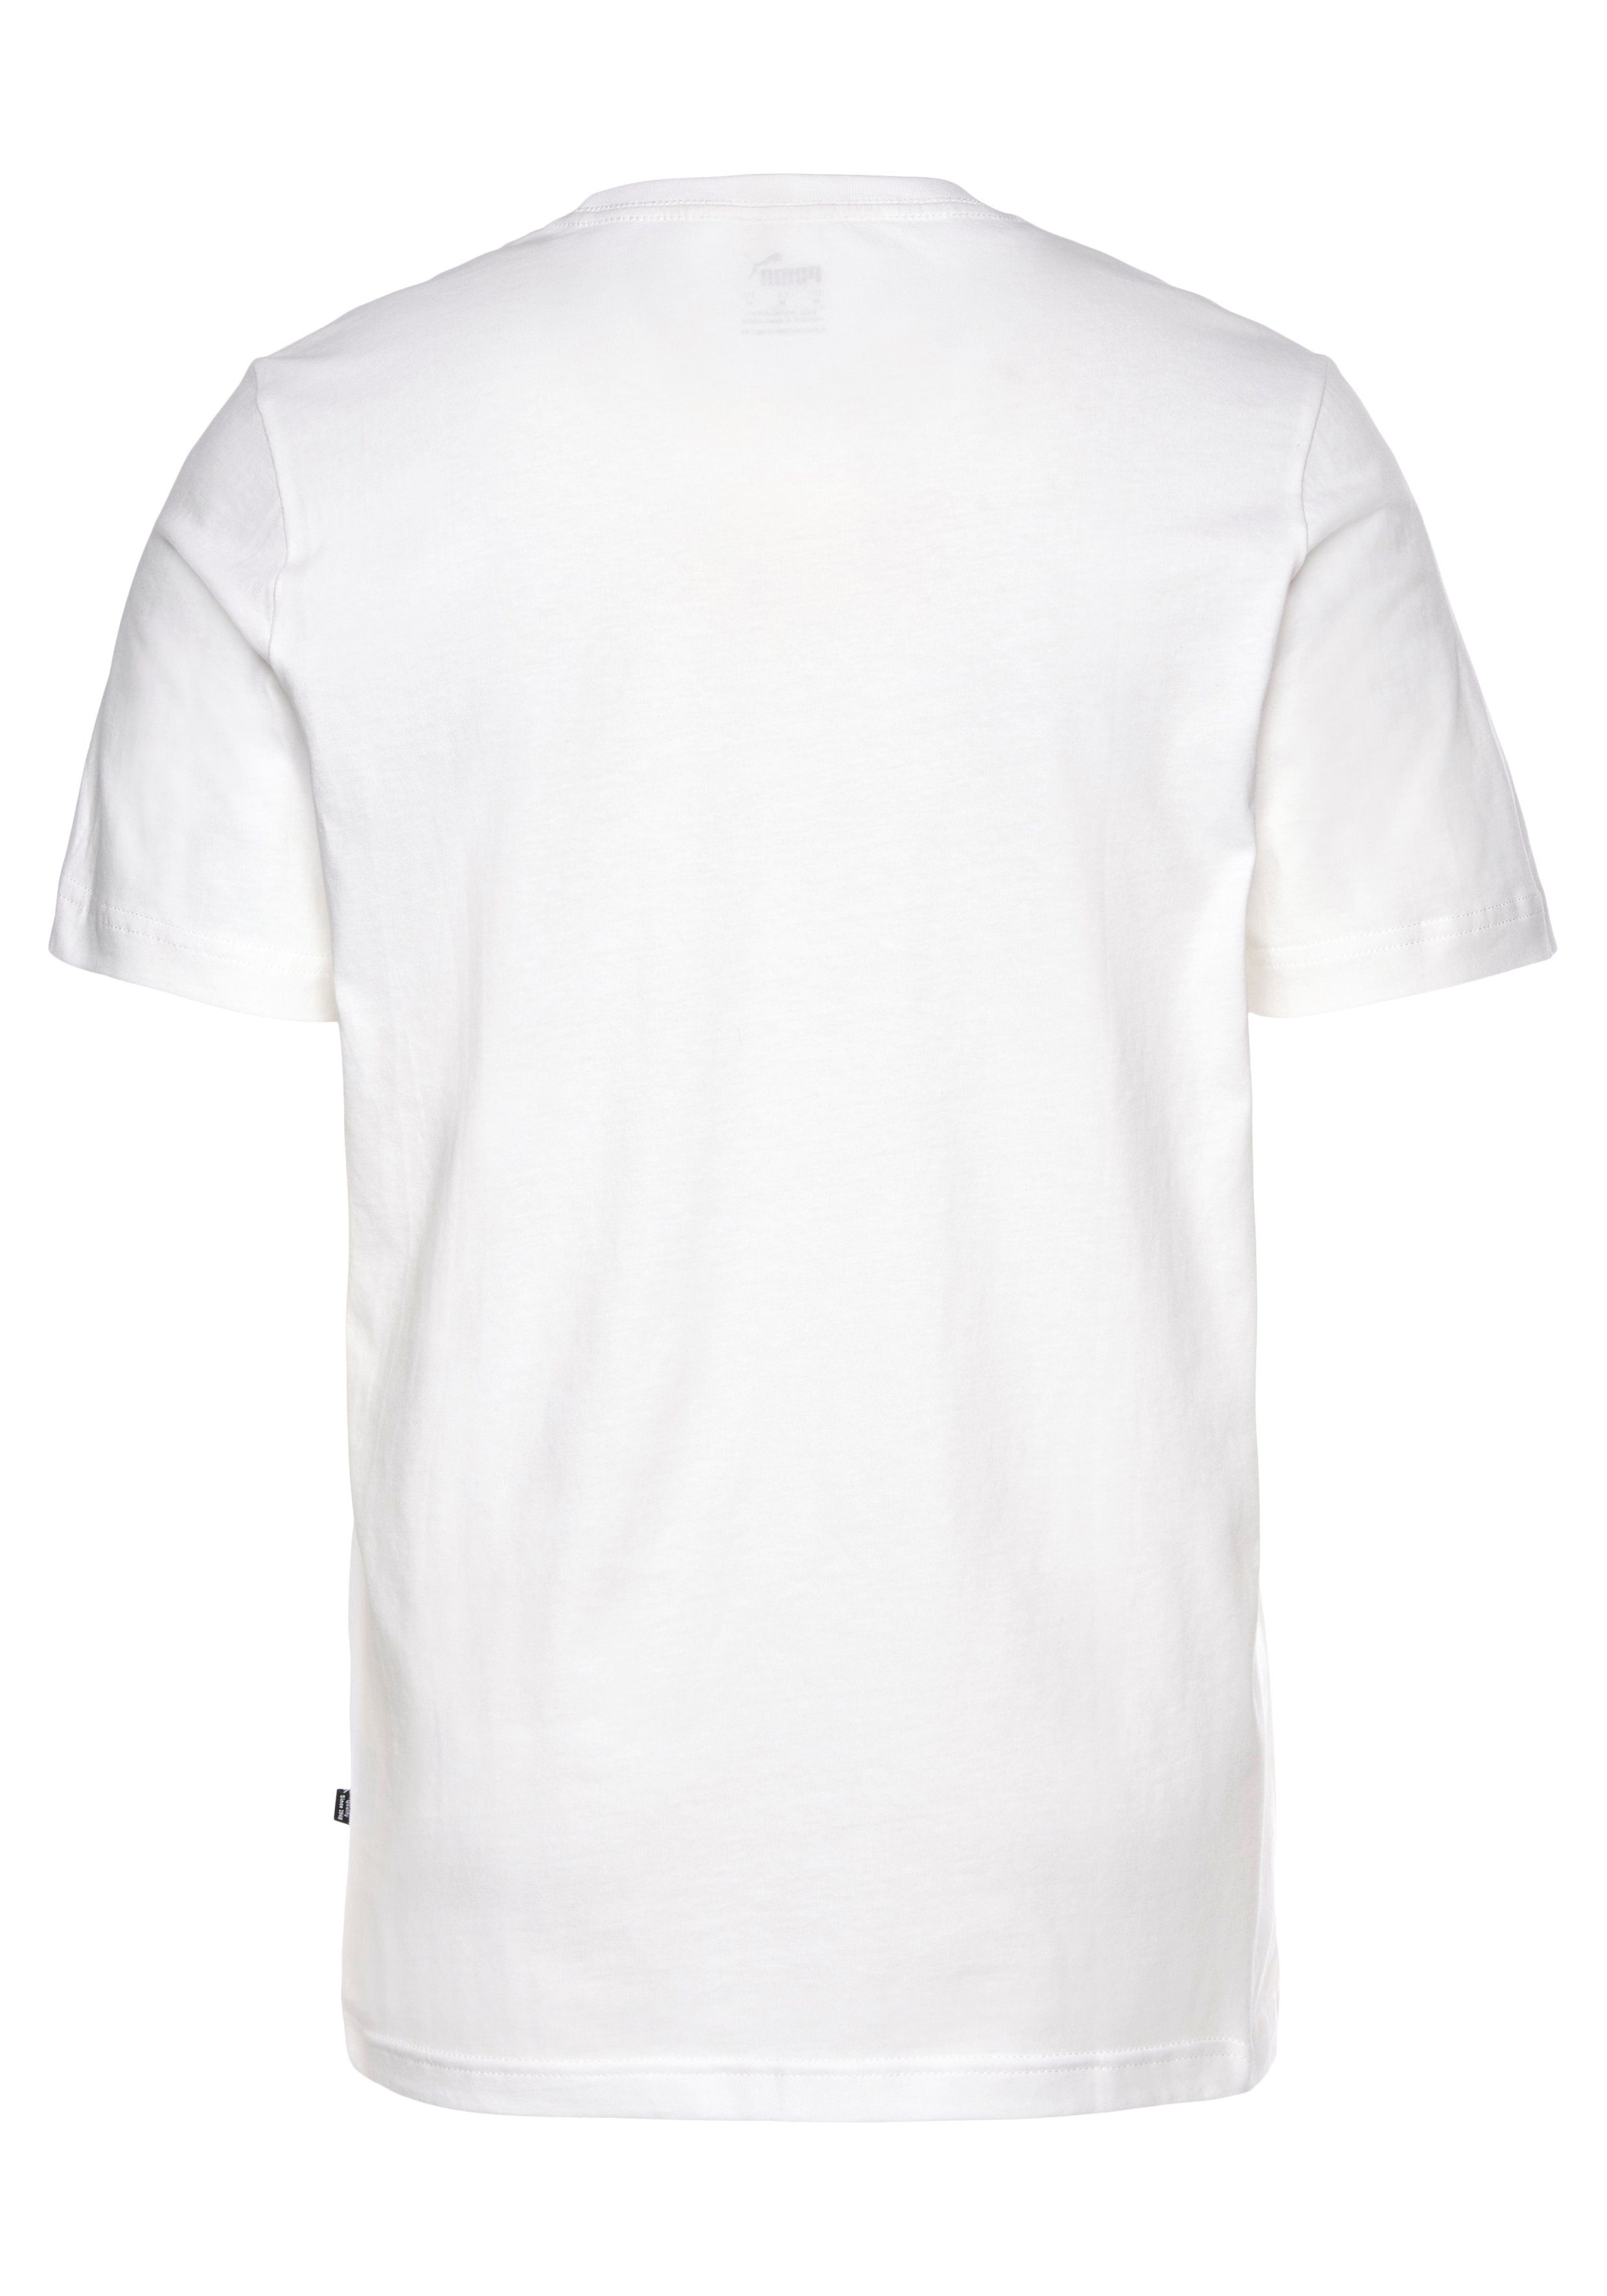 TEE White T-Shirt ESS PUMA LOGO Puma